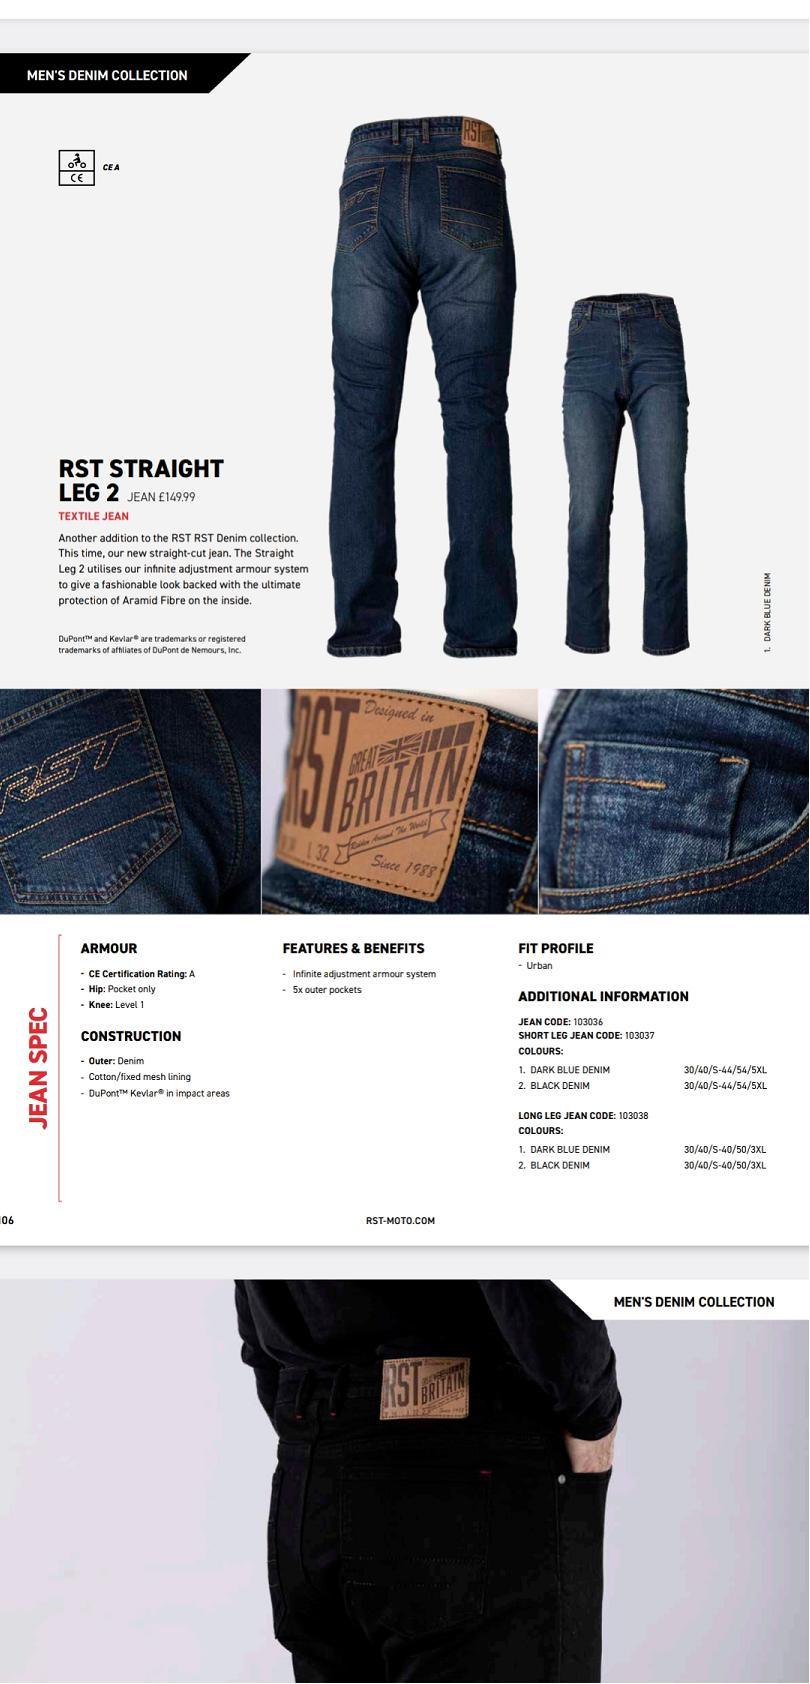 RST Straight leg 2 jeans